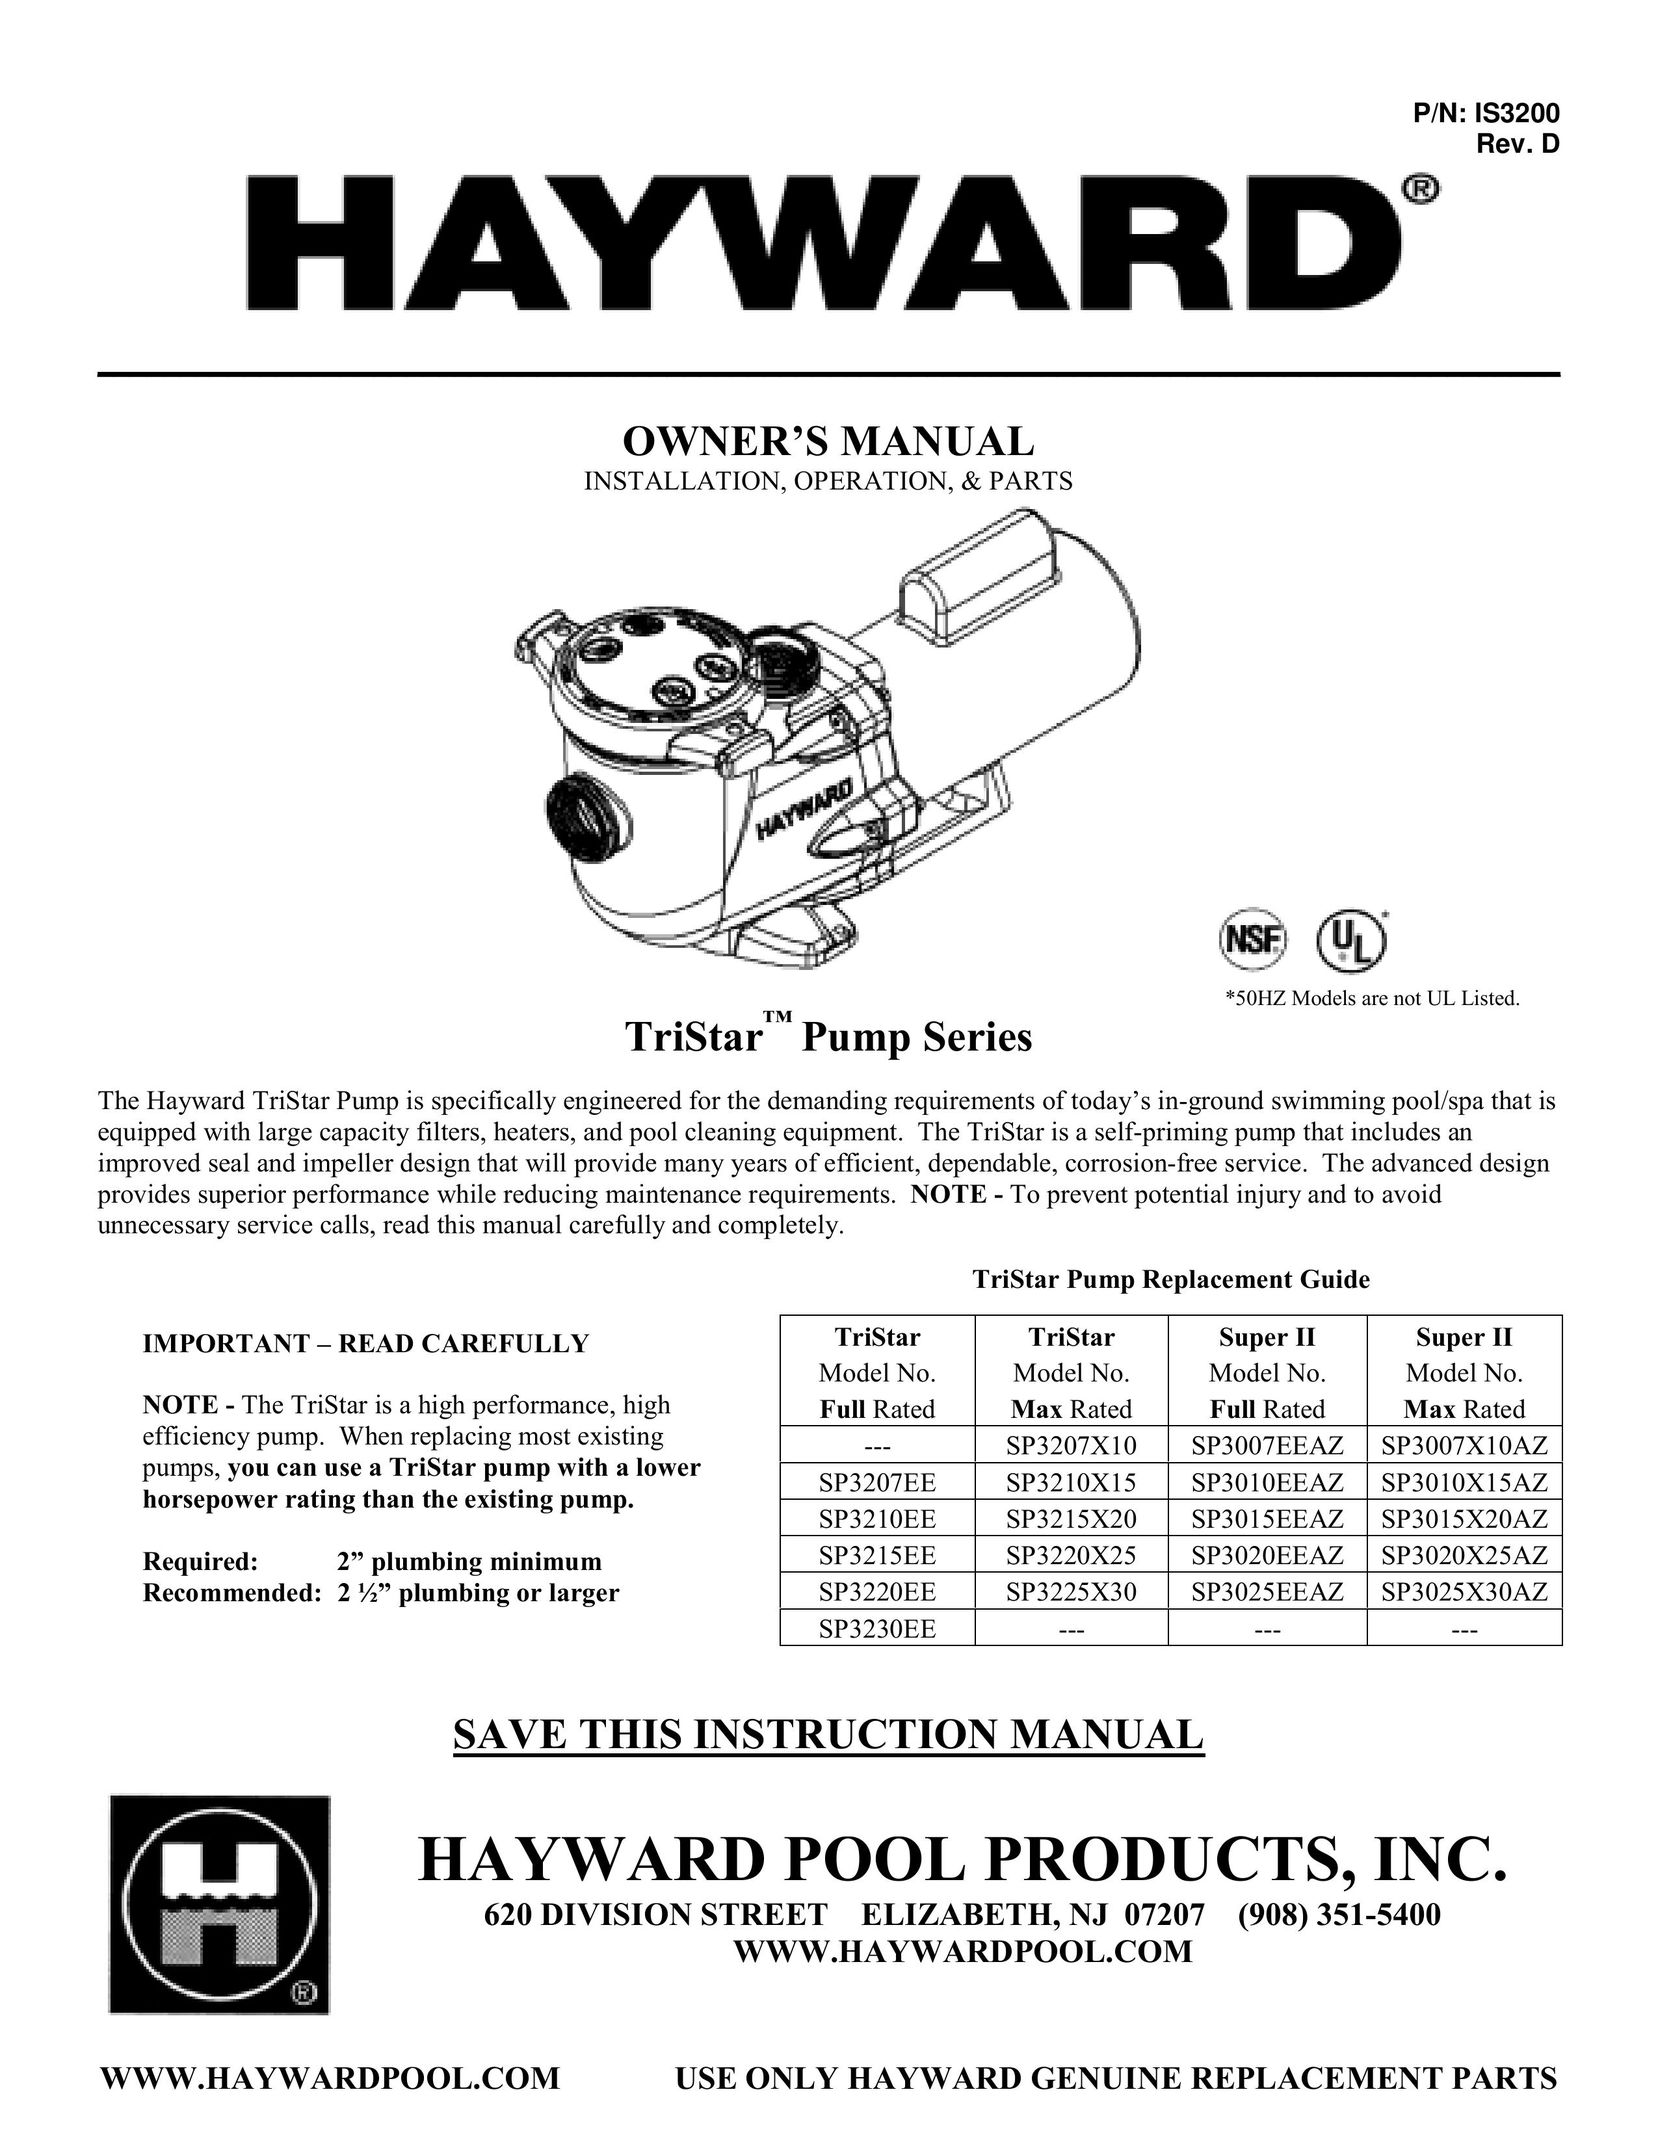 TriStar SP3007X10AZ Heat Pump User Manual